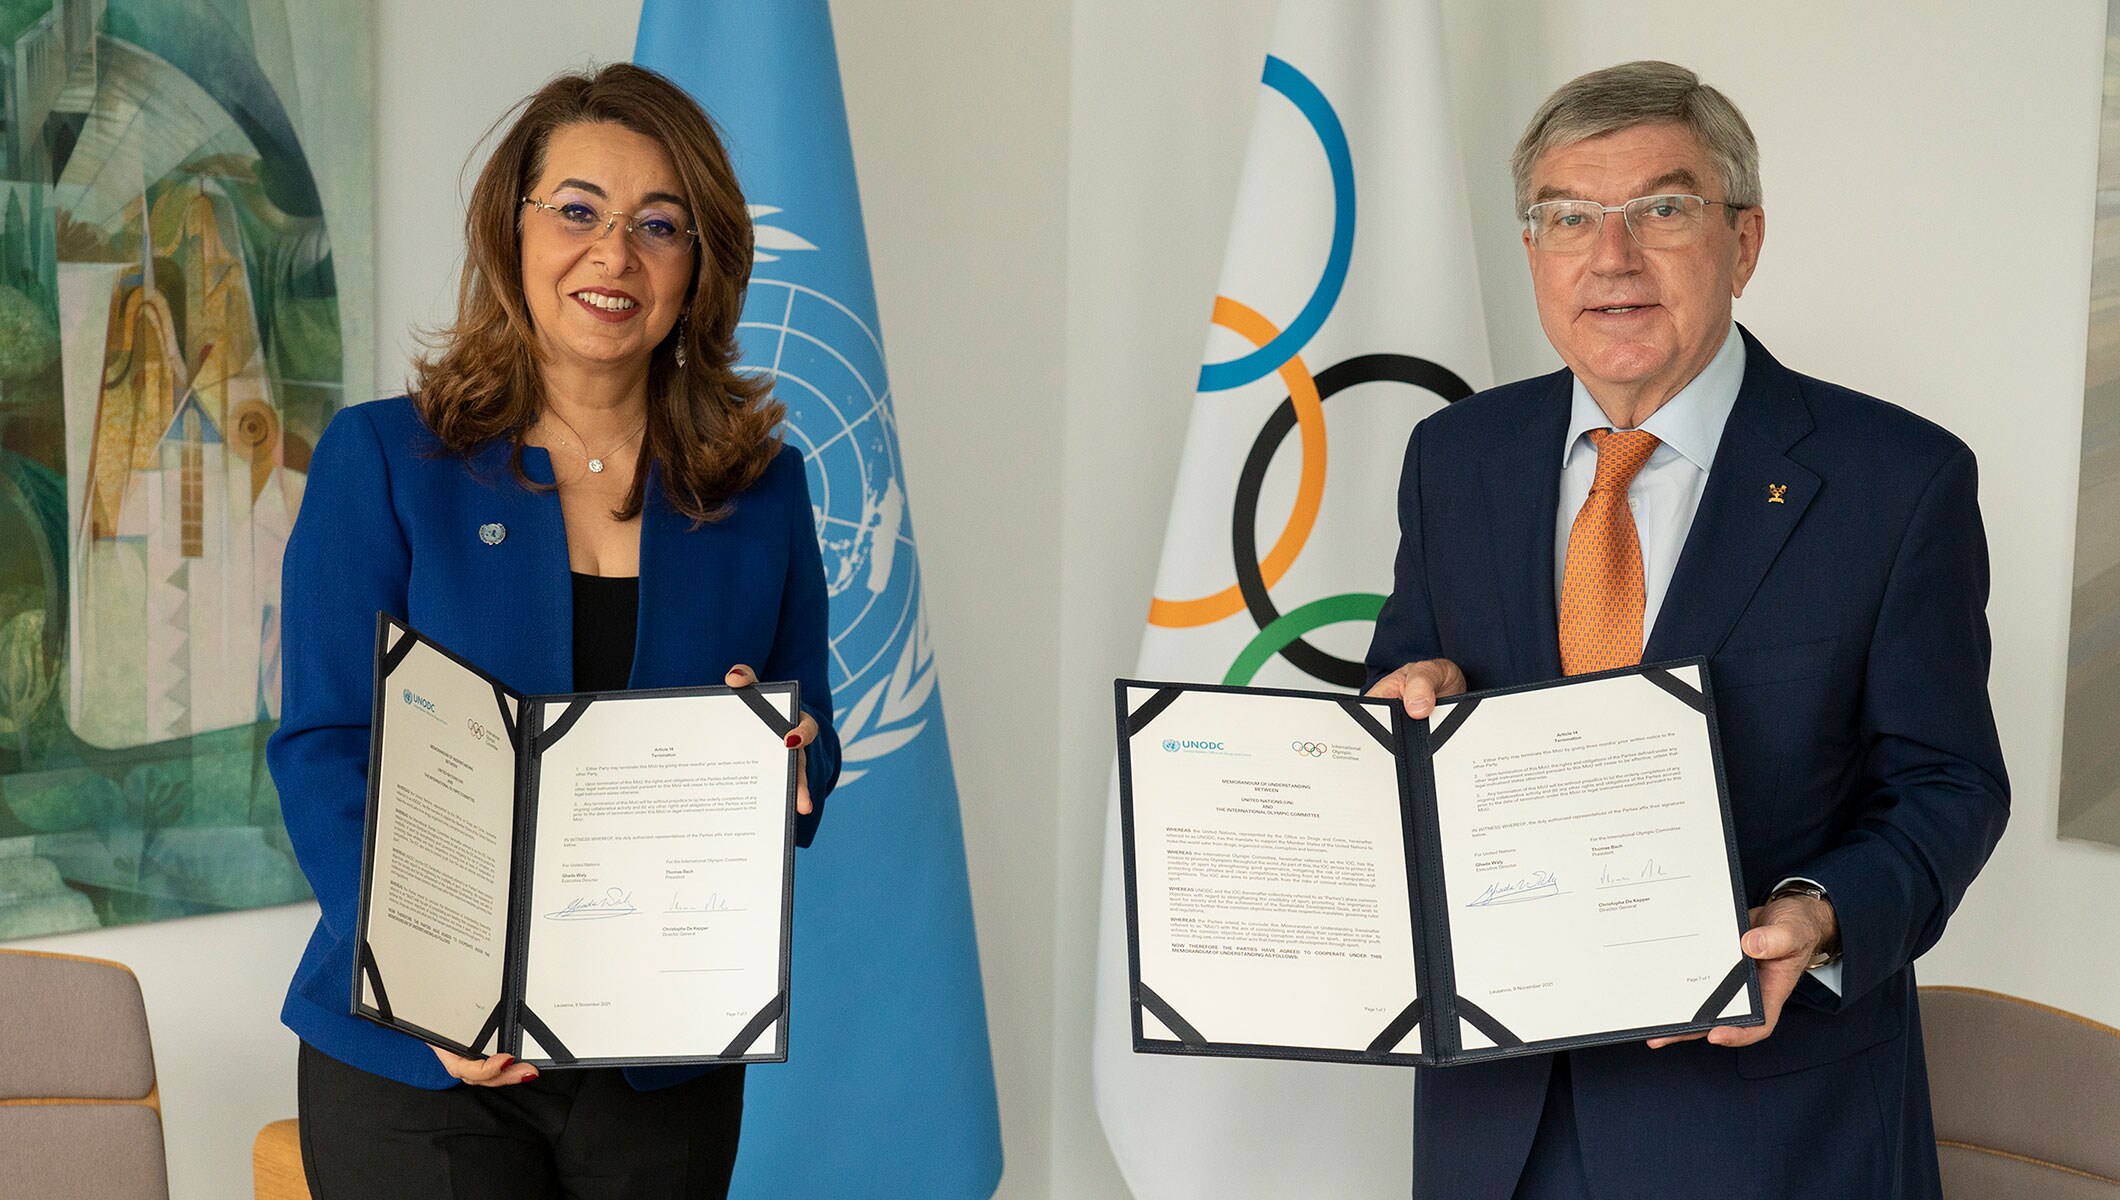 IOC President Thomas Bach and UNODC Executive Director Ghada Waly